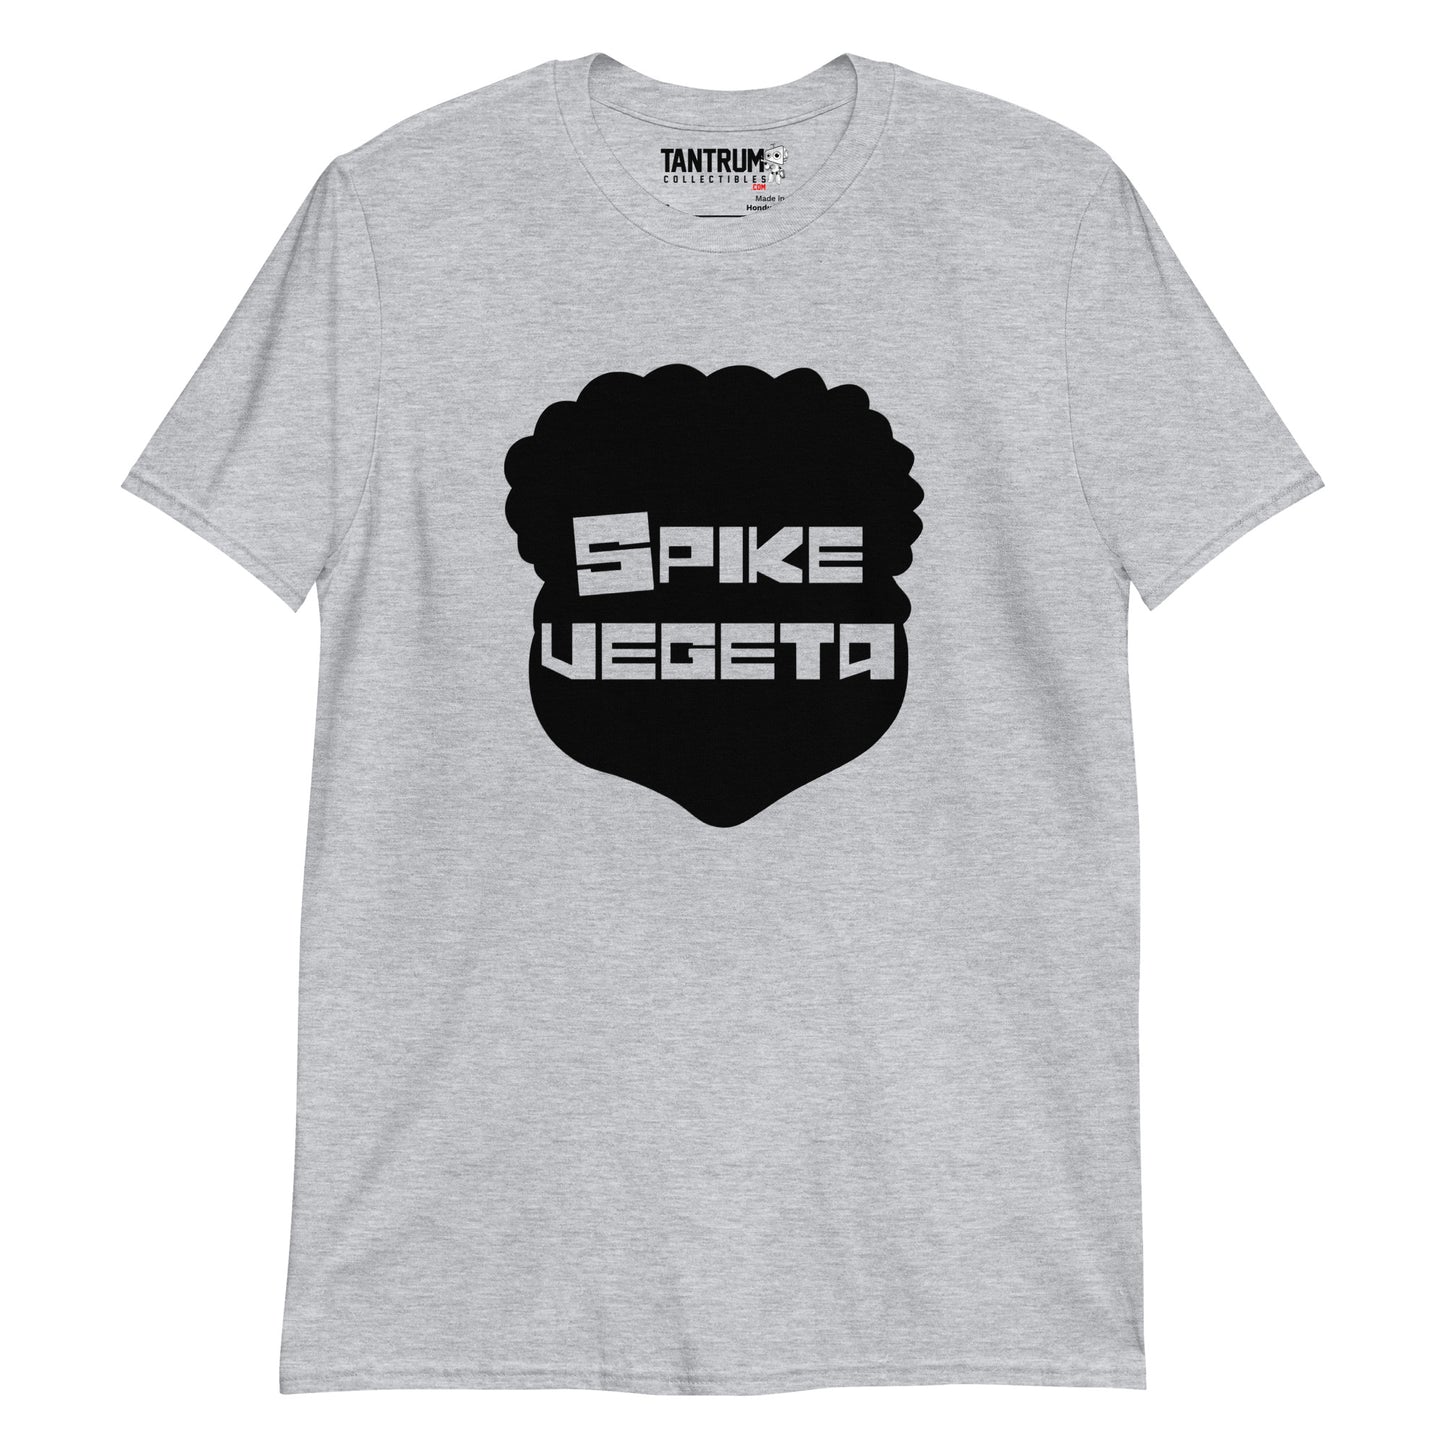 SpikeVegeta - Unisex T-Shirt - SpikeVegeta Nut Silhouette